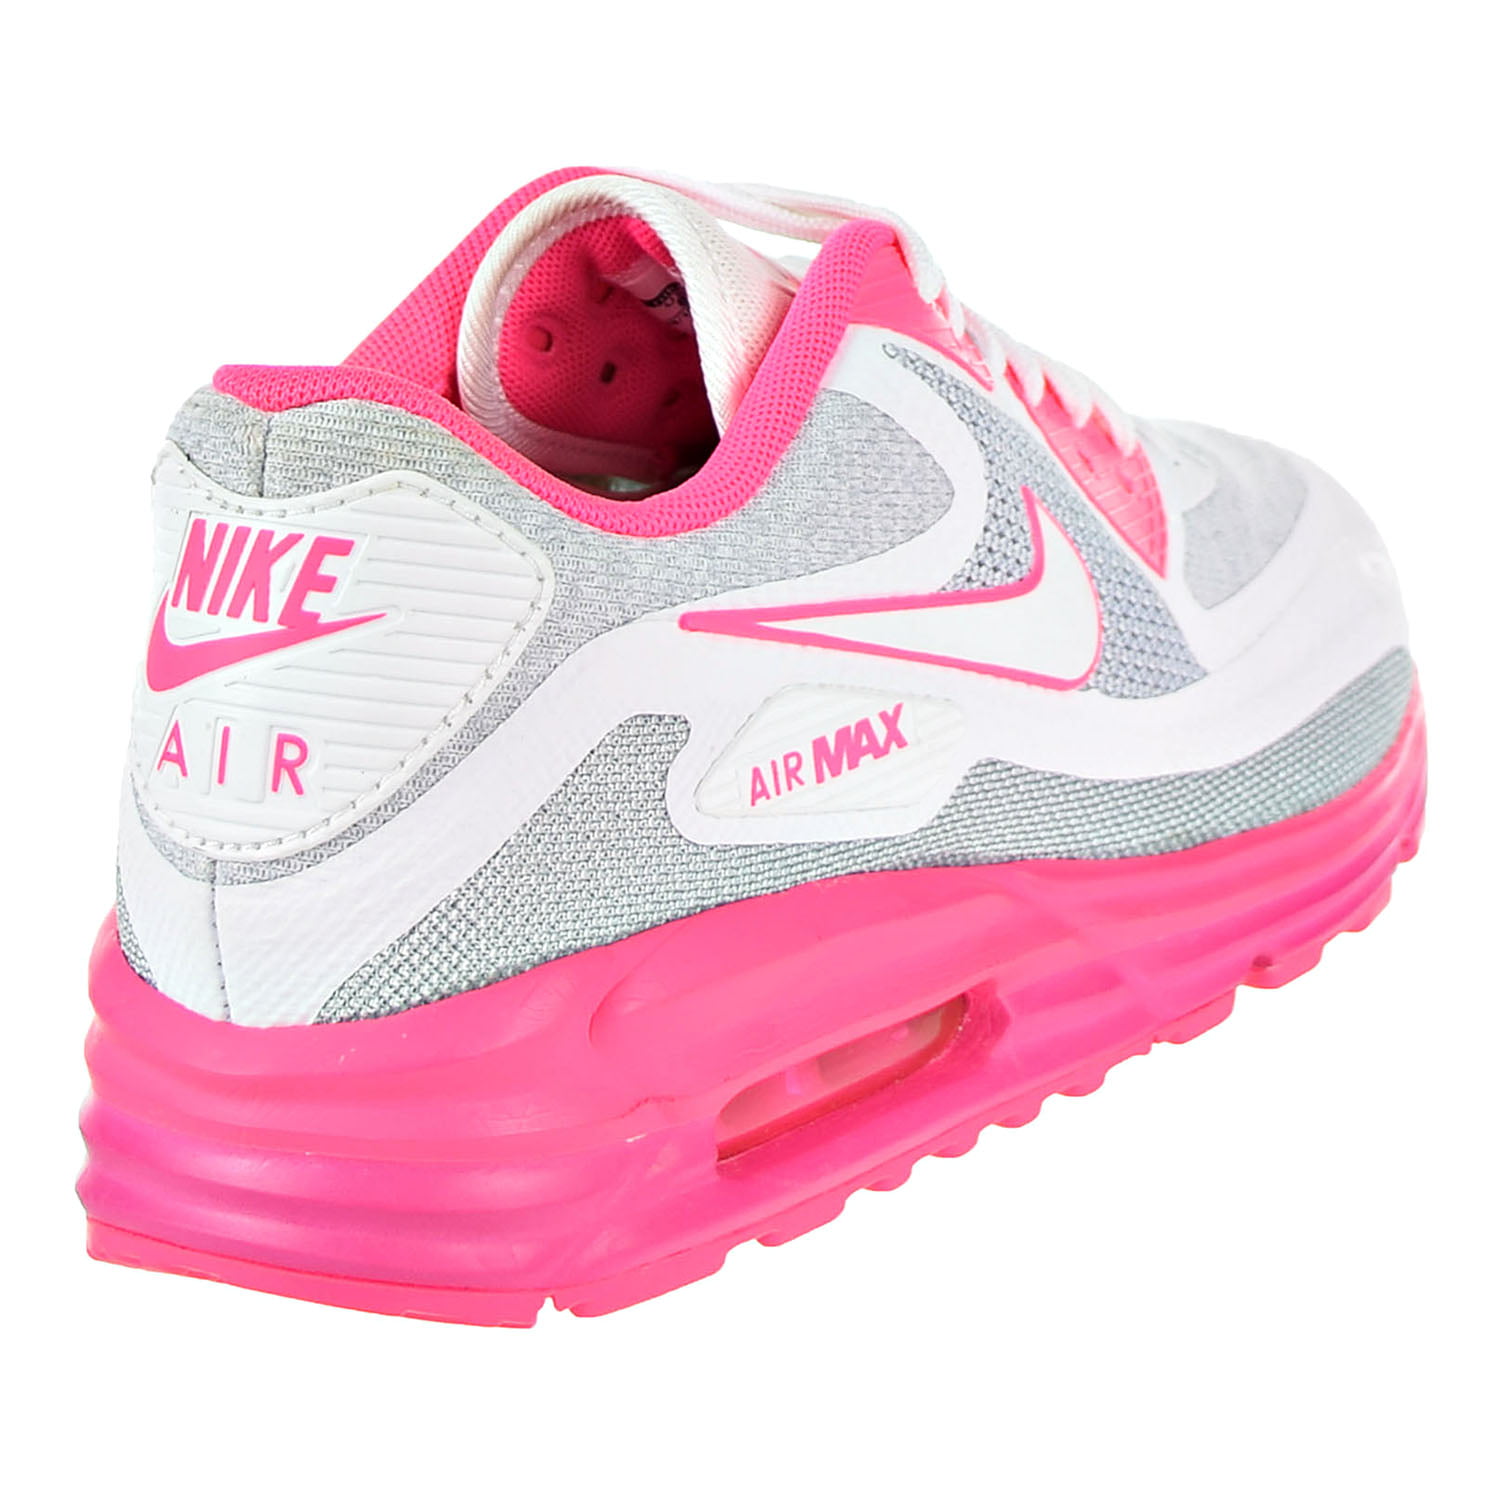 Max Lunar 90 C 3.0 Women's Shoes Hyper pink/White - Walmart.com